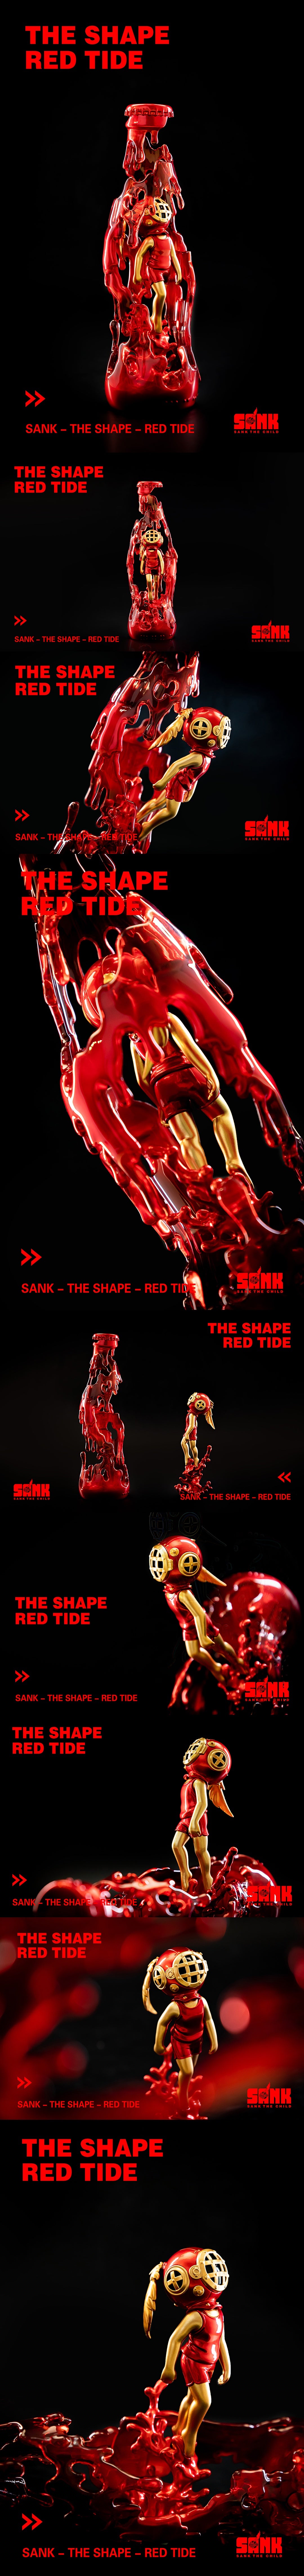 Sank-The Shape-Red Tide